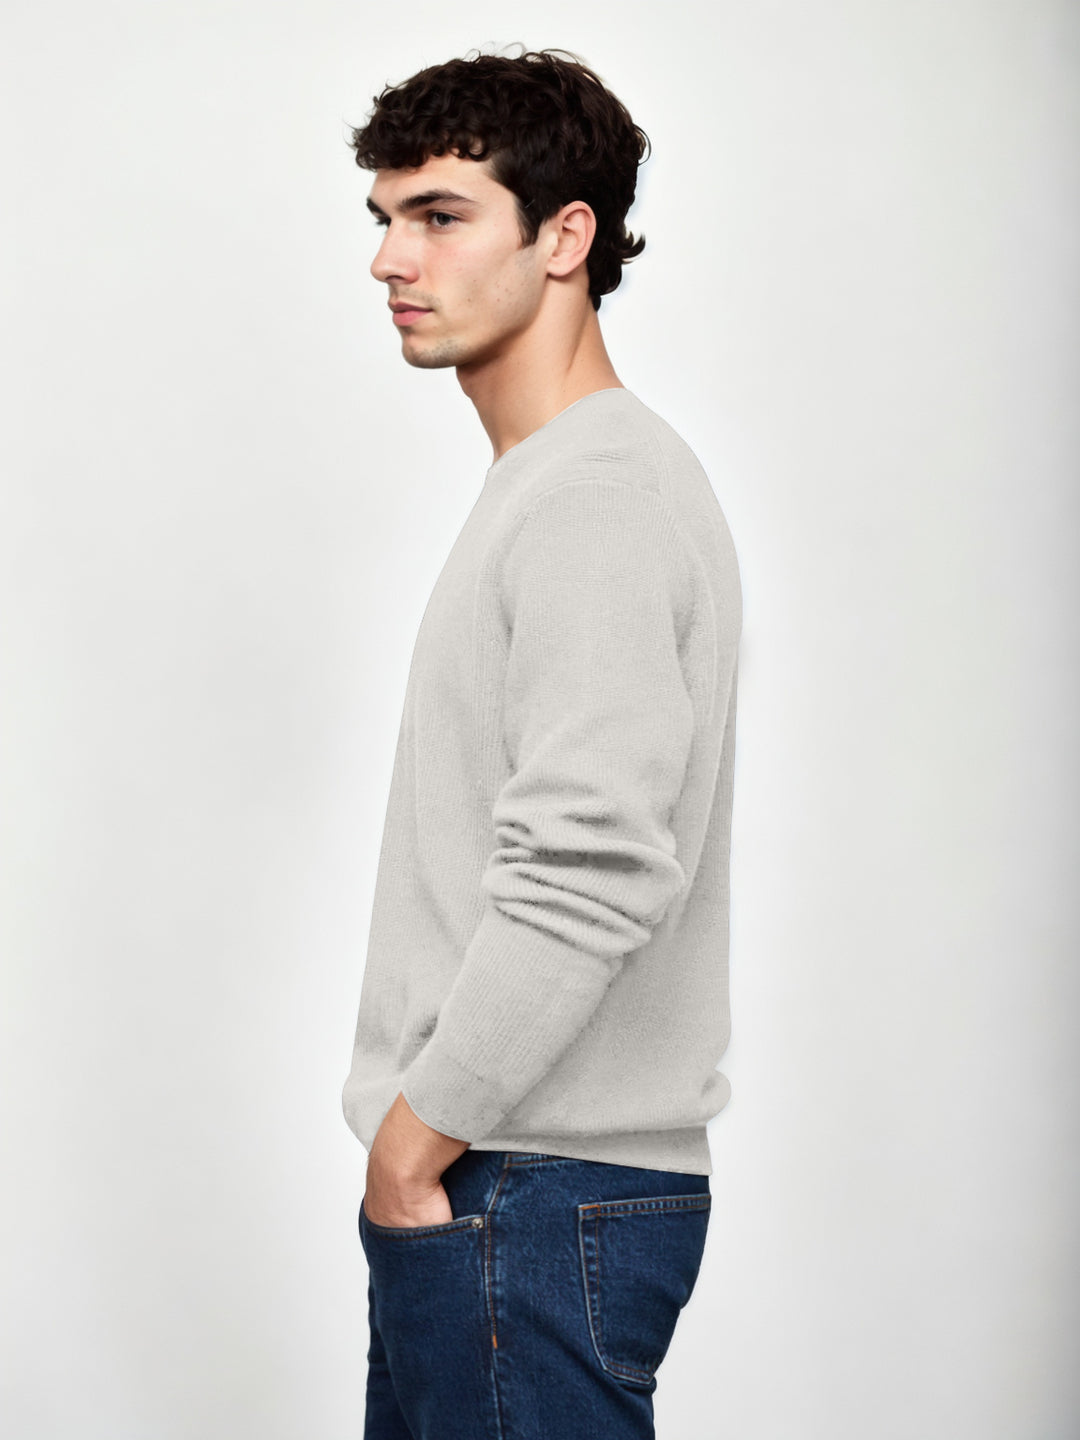 Hemsters Beige knitted Full Sleevs Sweatshirt For Man